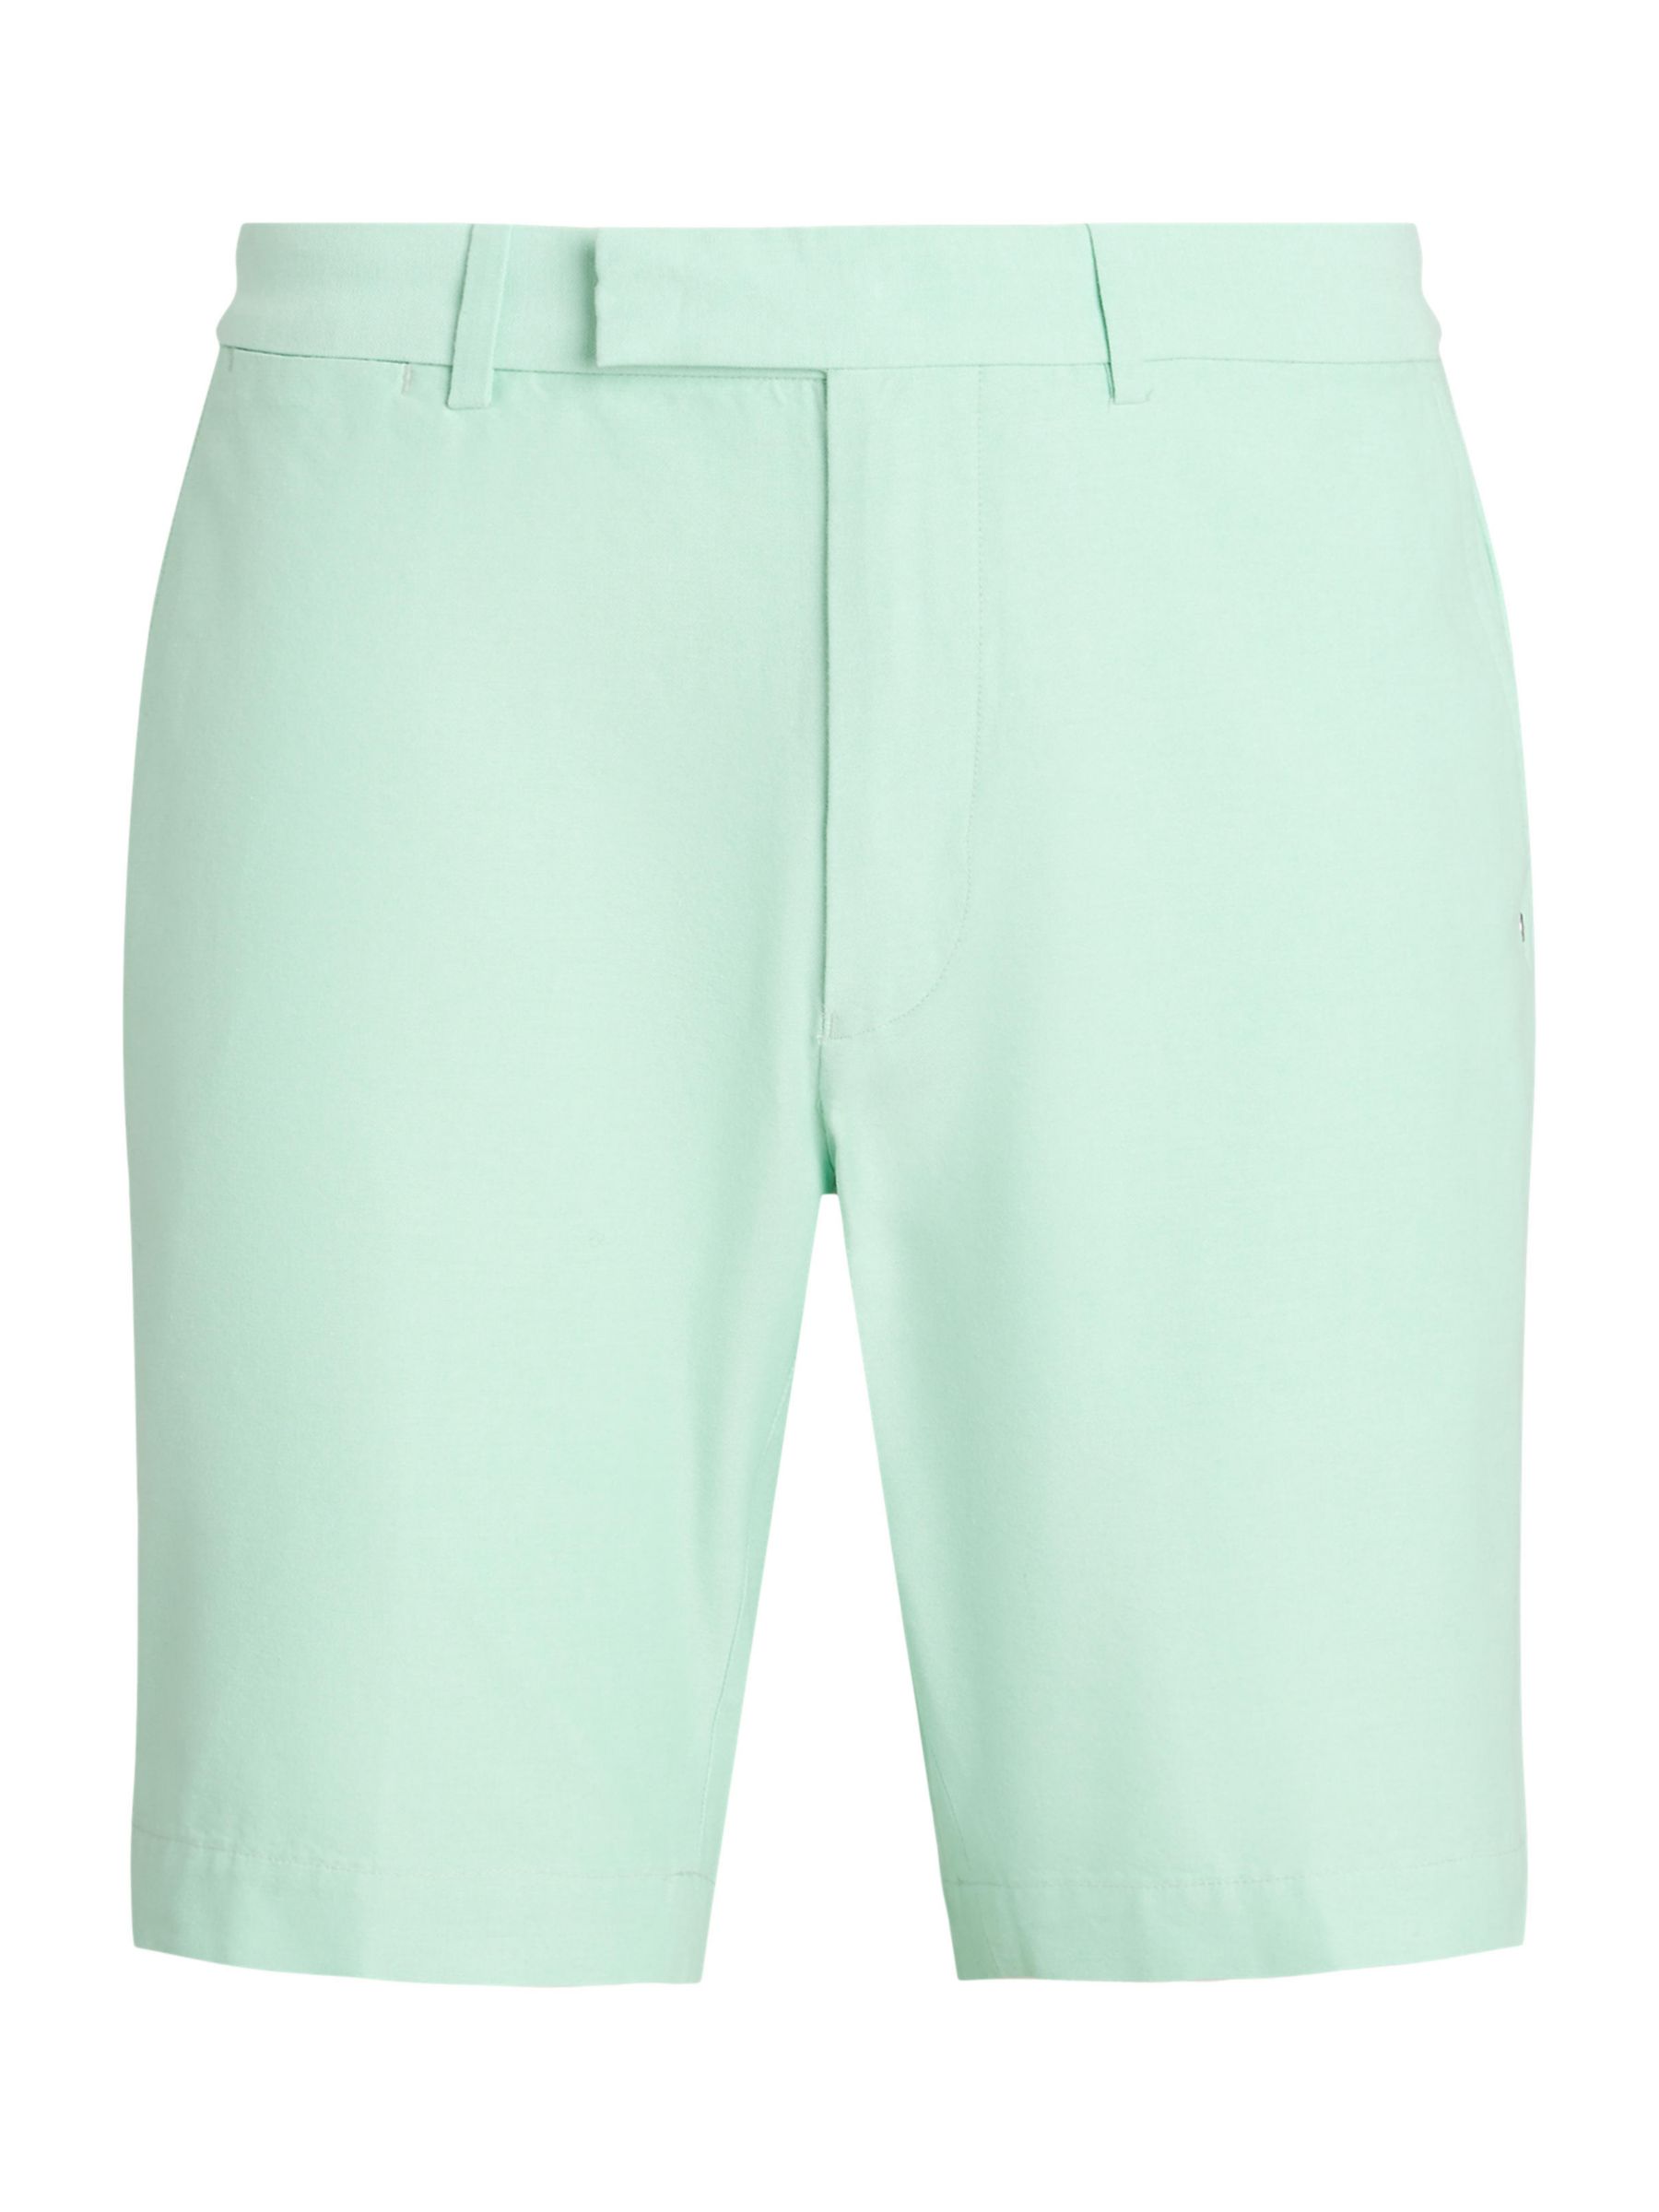 Buy Ralph Lauren 9-Inch Tailored Fit Performance Shorts, Pastel Mint Online at johnlewis.com